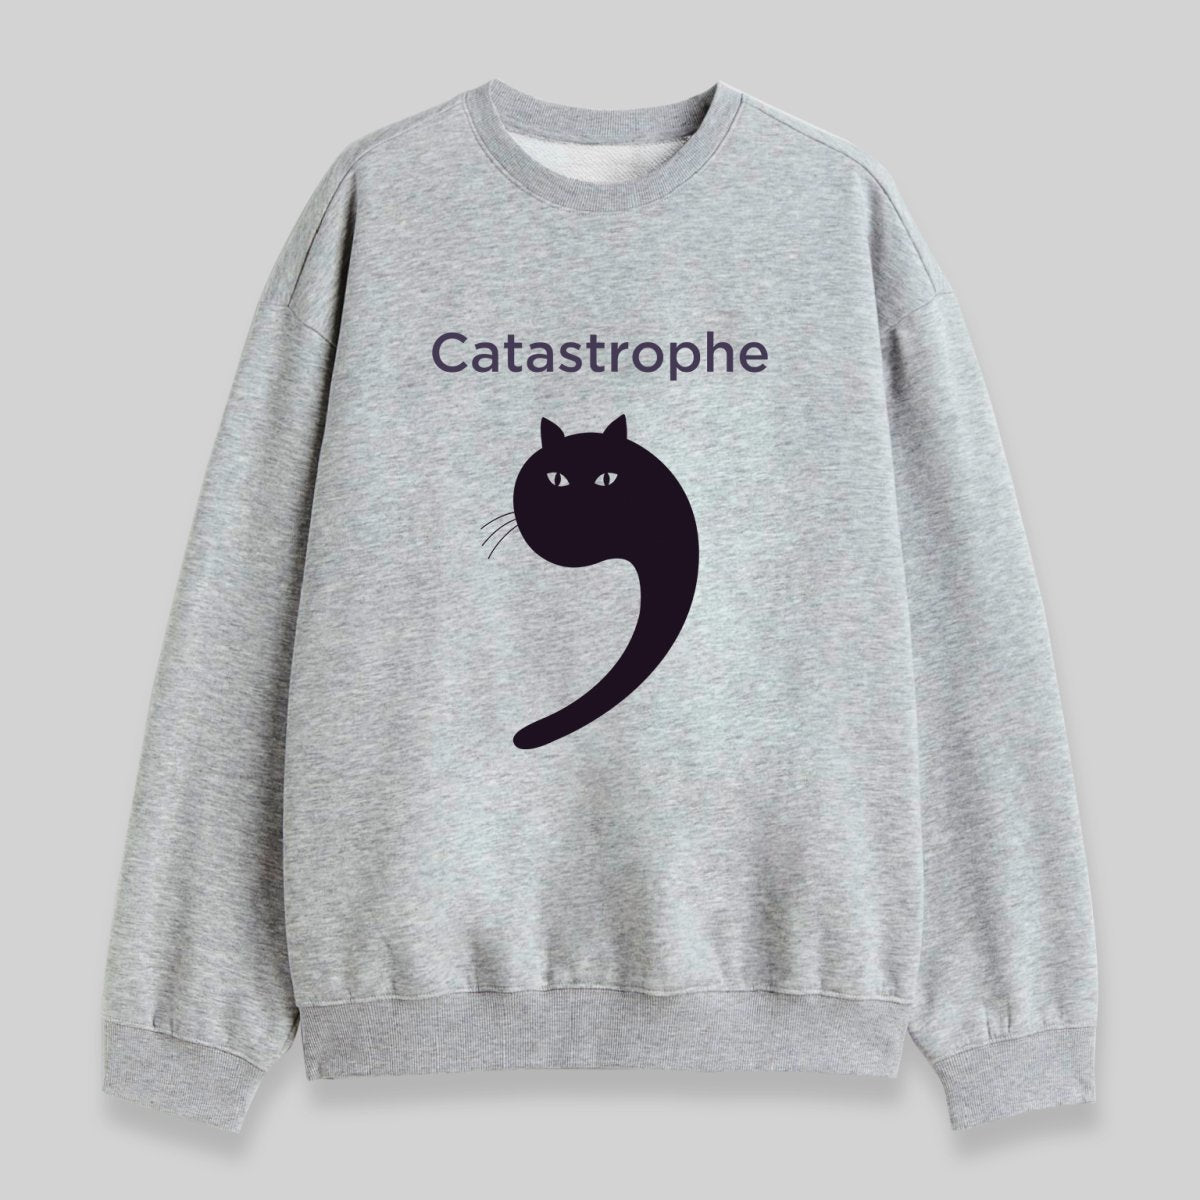 Catastrophe Sweatshirt - Geeksoutfit